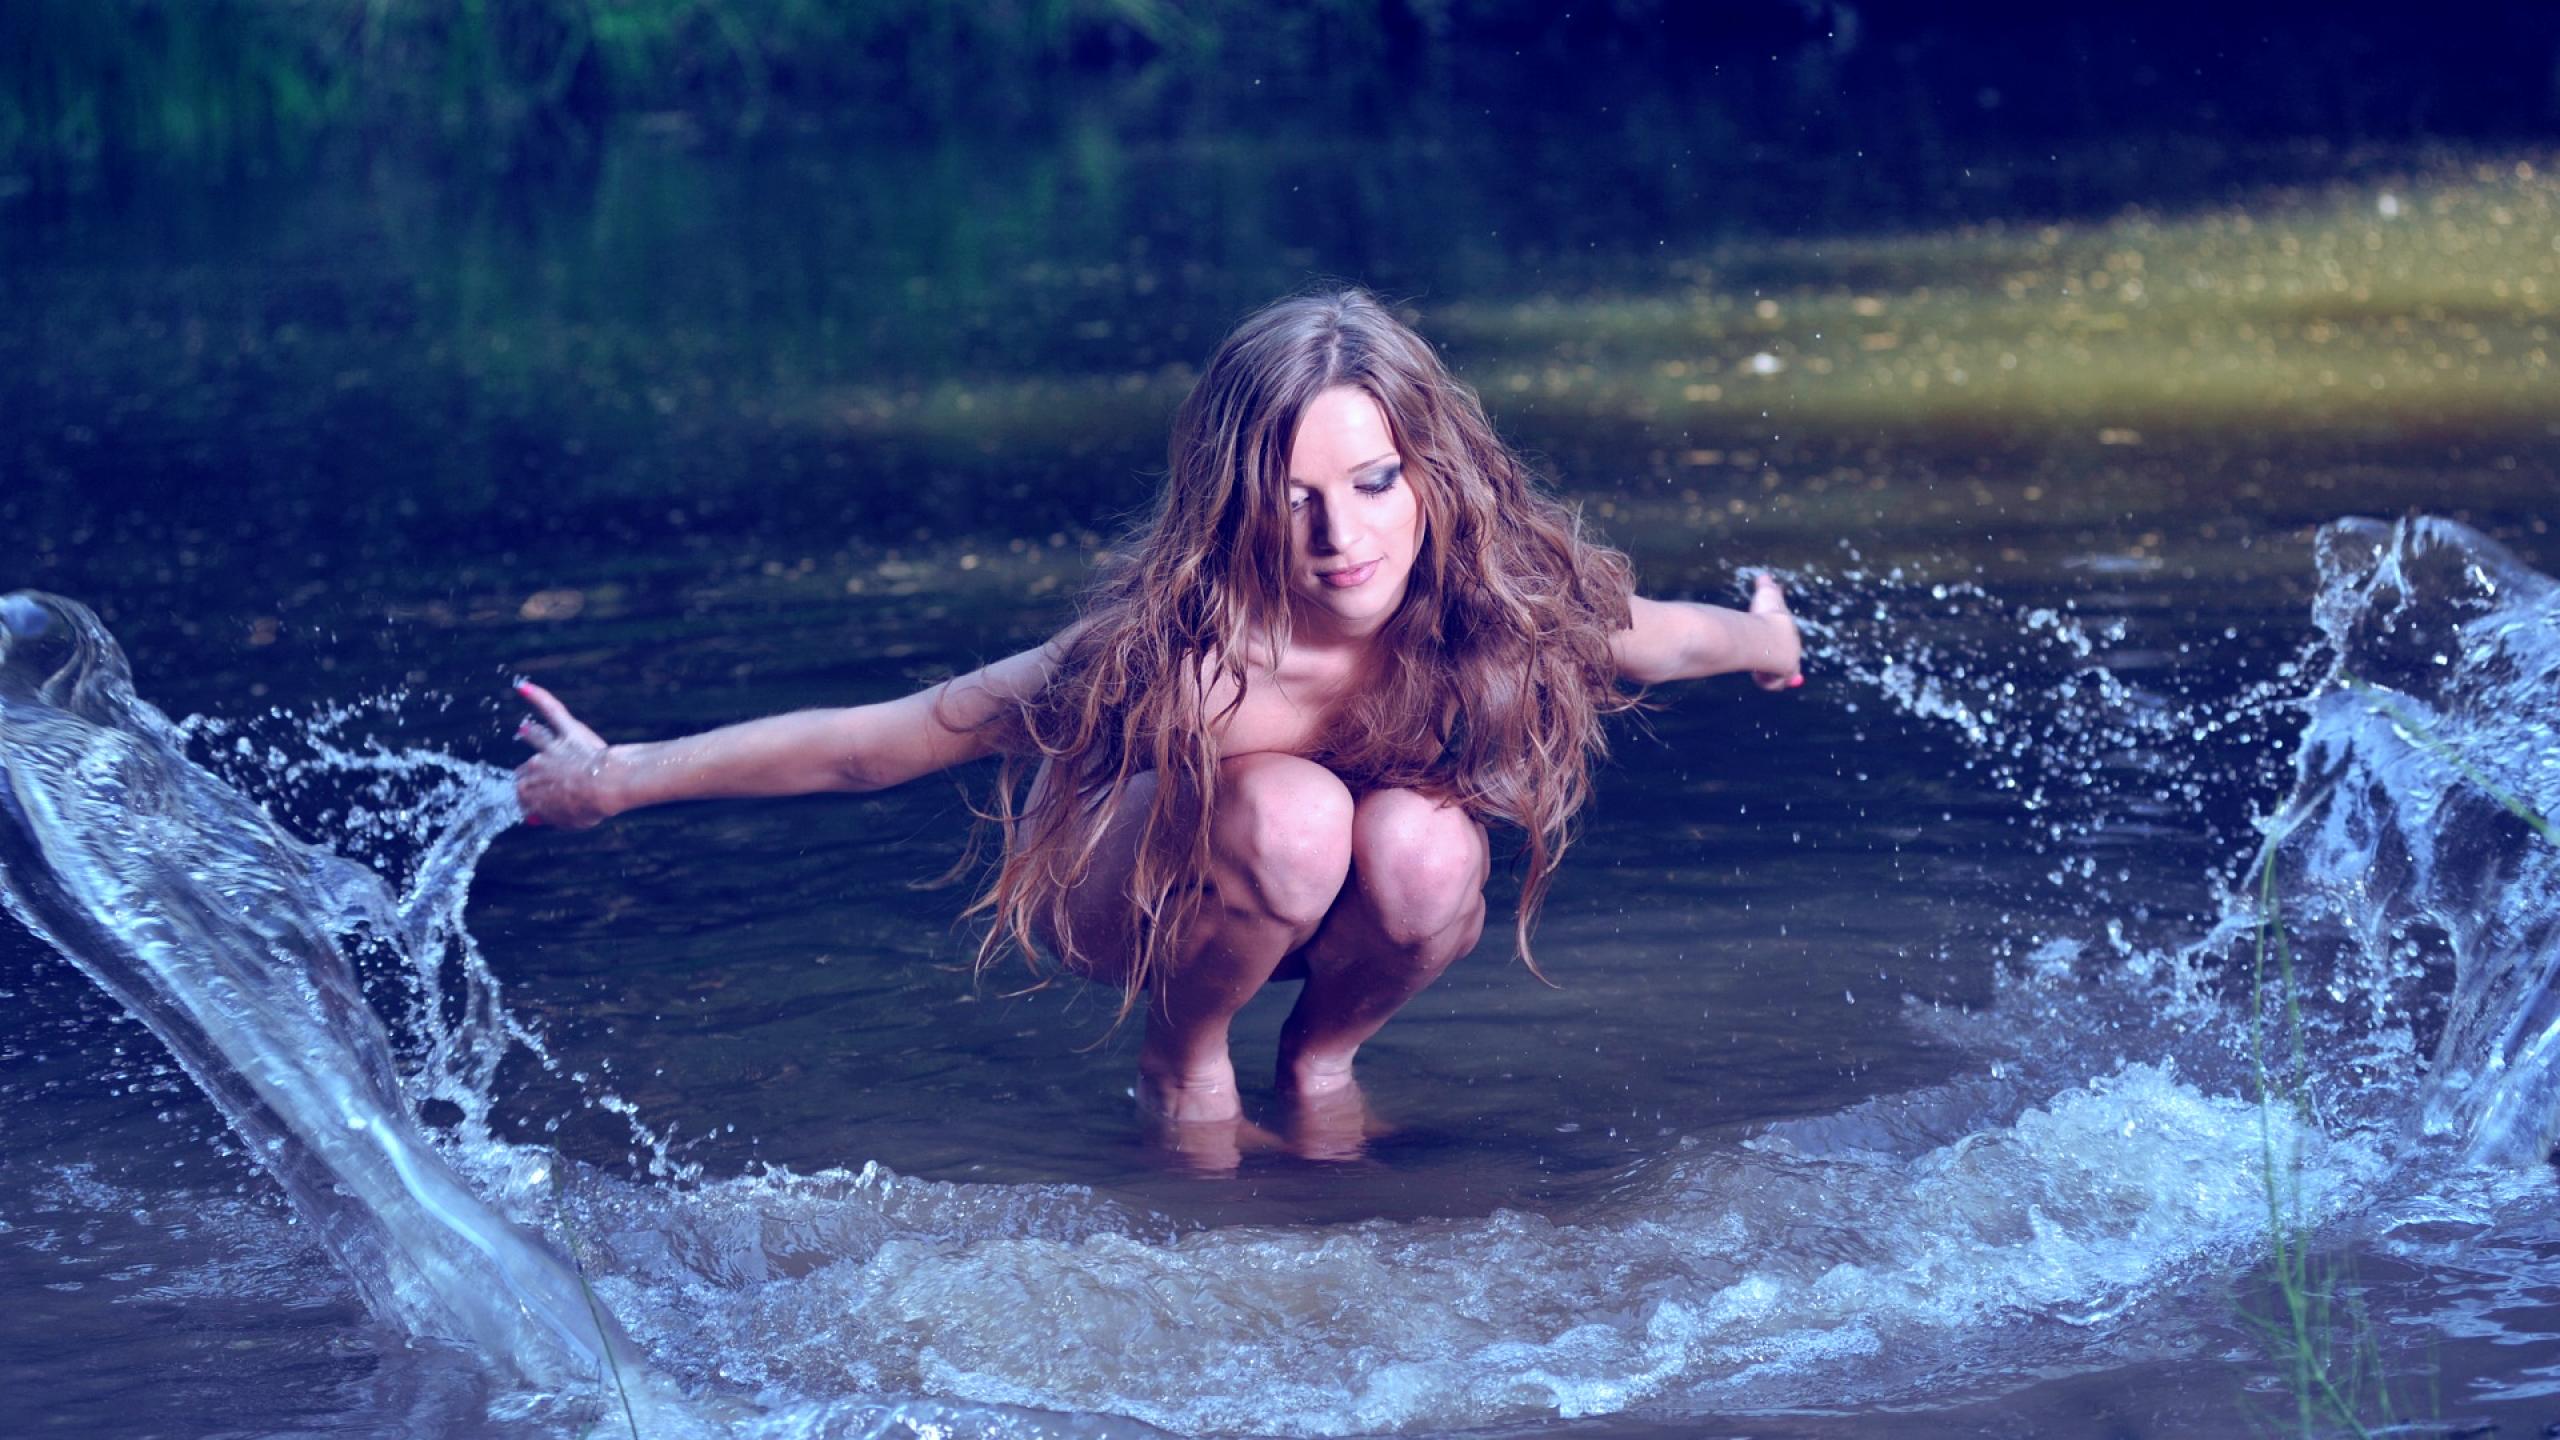 Free photo: Girl In Water, Girl, Human Download